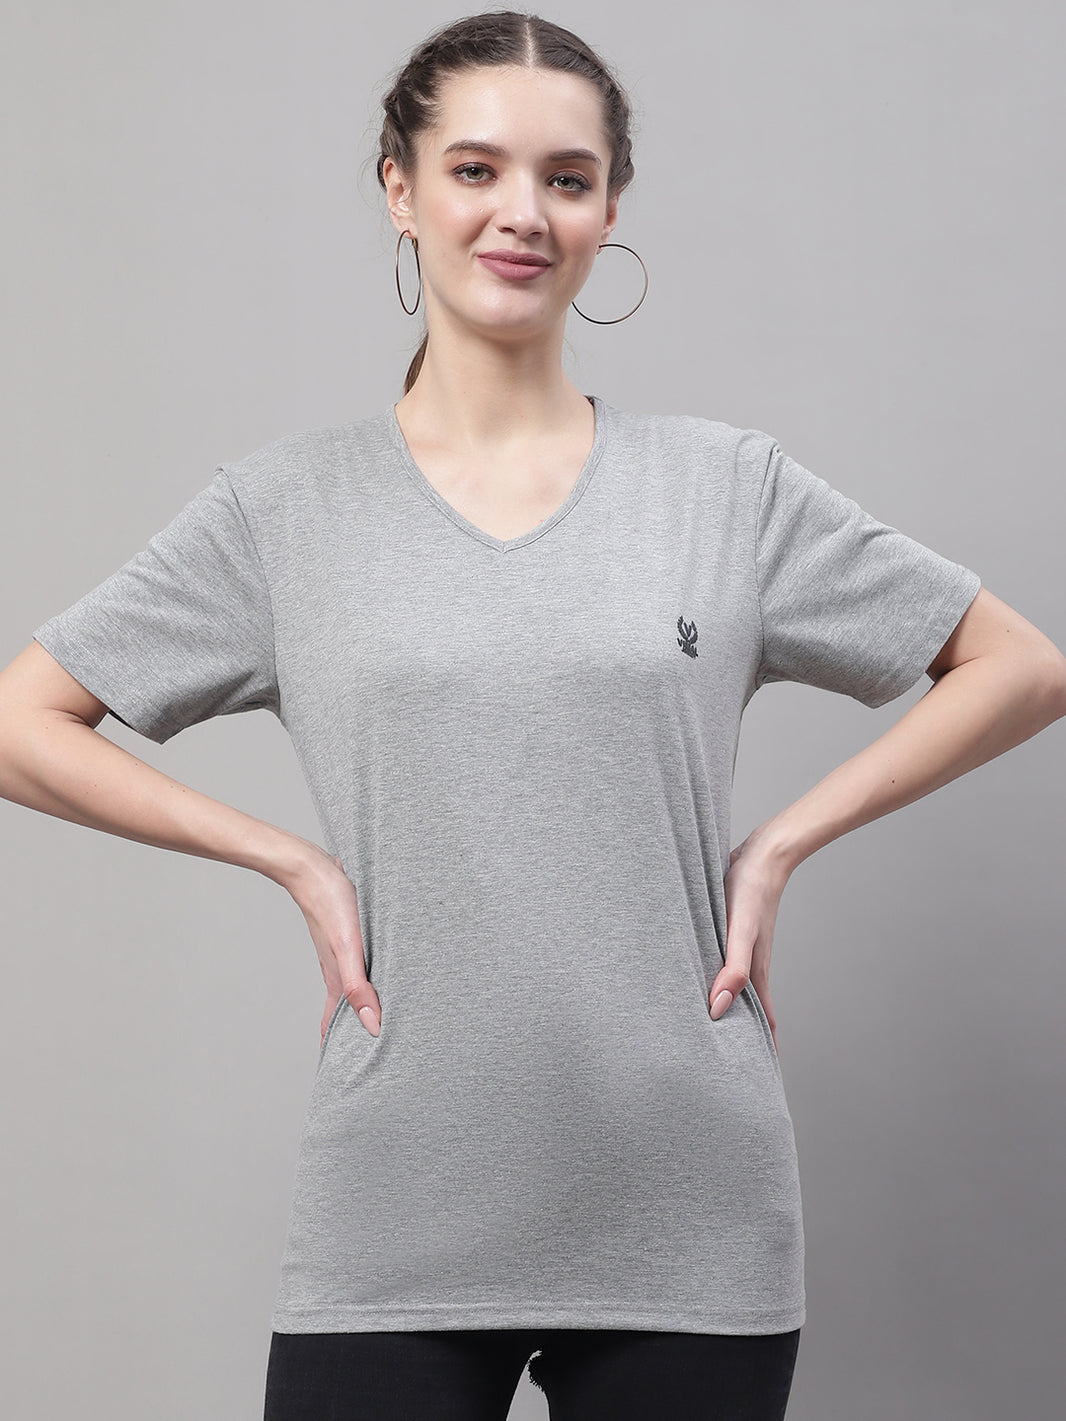 Vimal Jonney V Neck Cotton Solid Grey Melange T-Shirt for Women